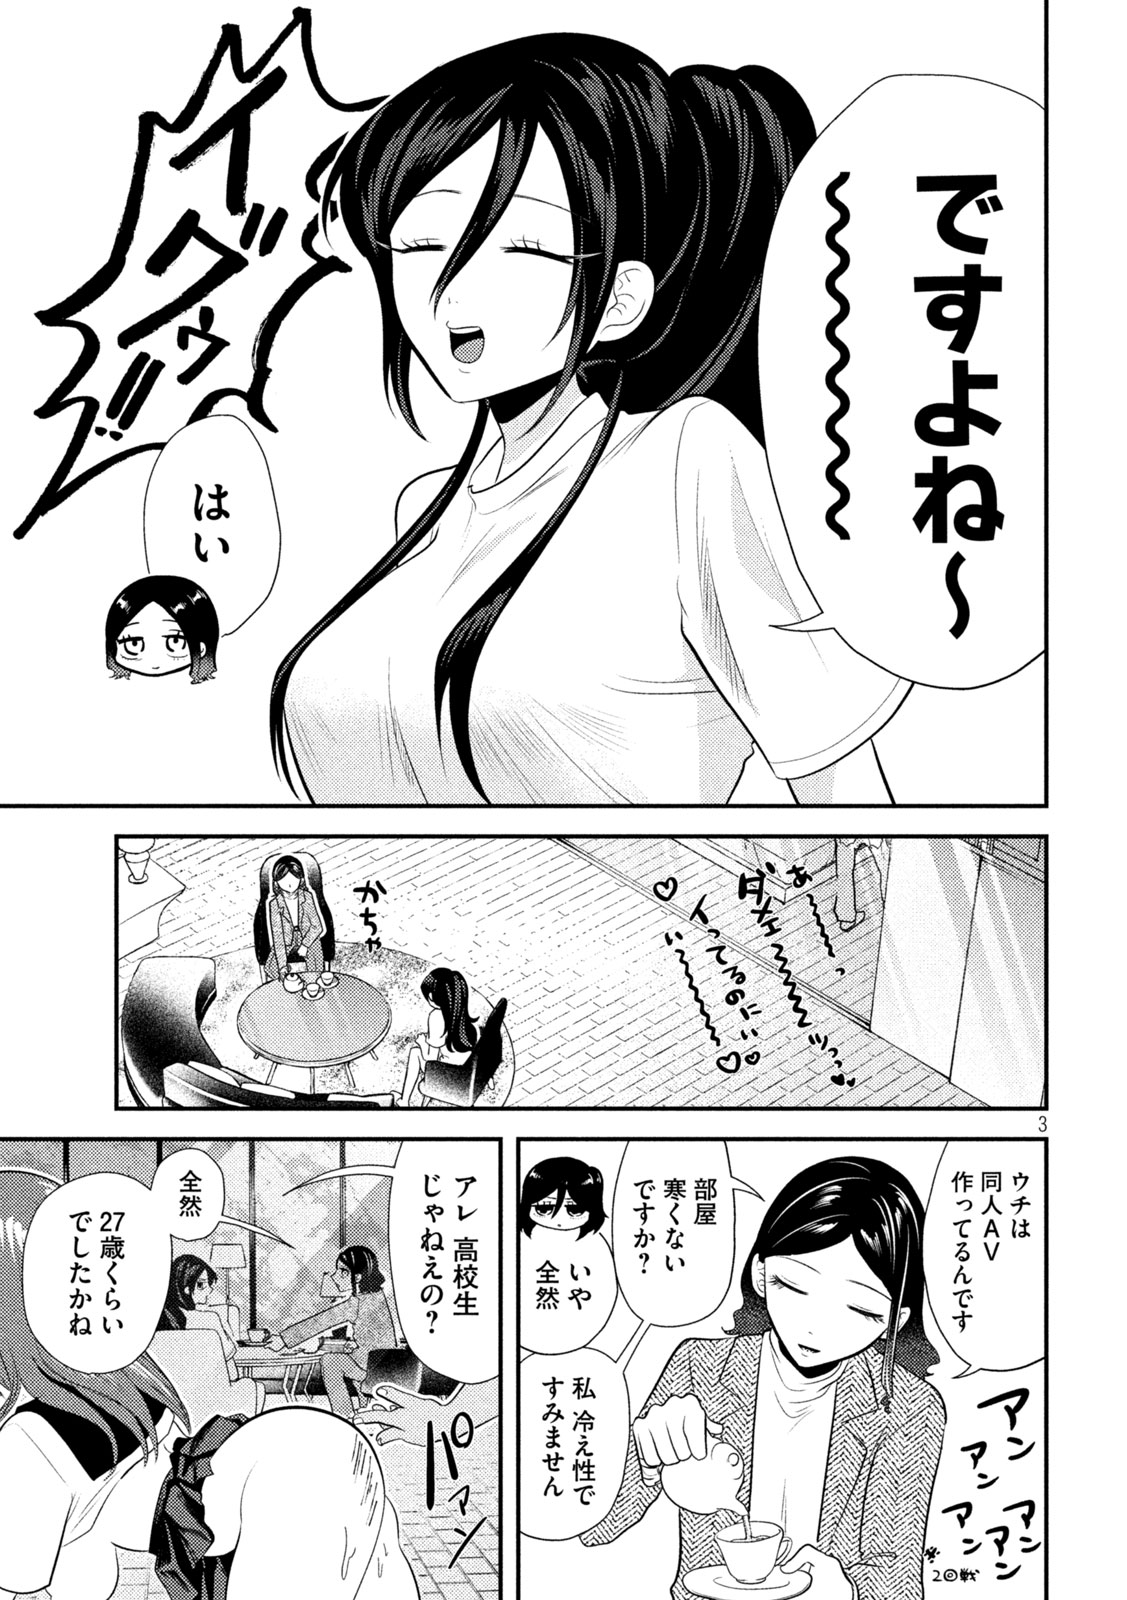 Heisei Haizanhei Sumire-chan - Chapter 14 - Page 3